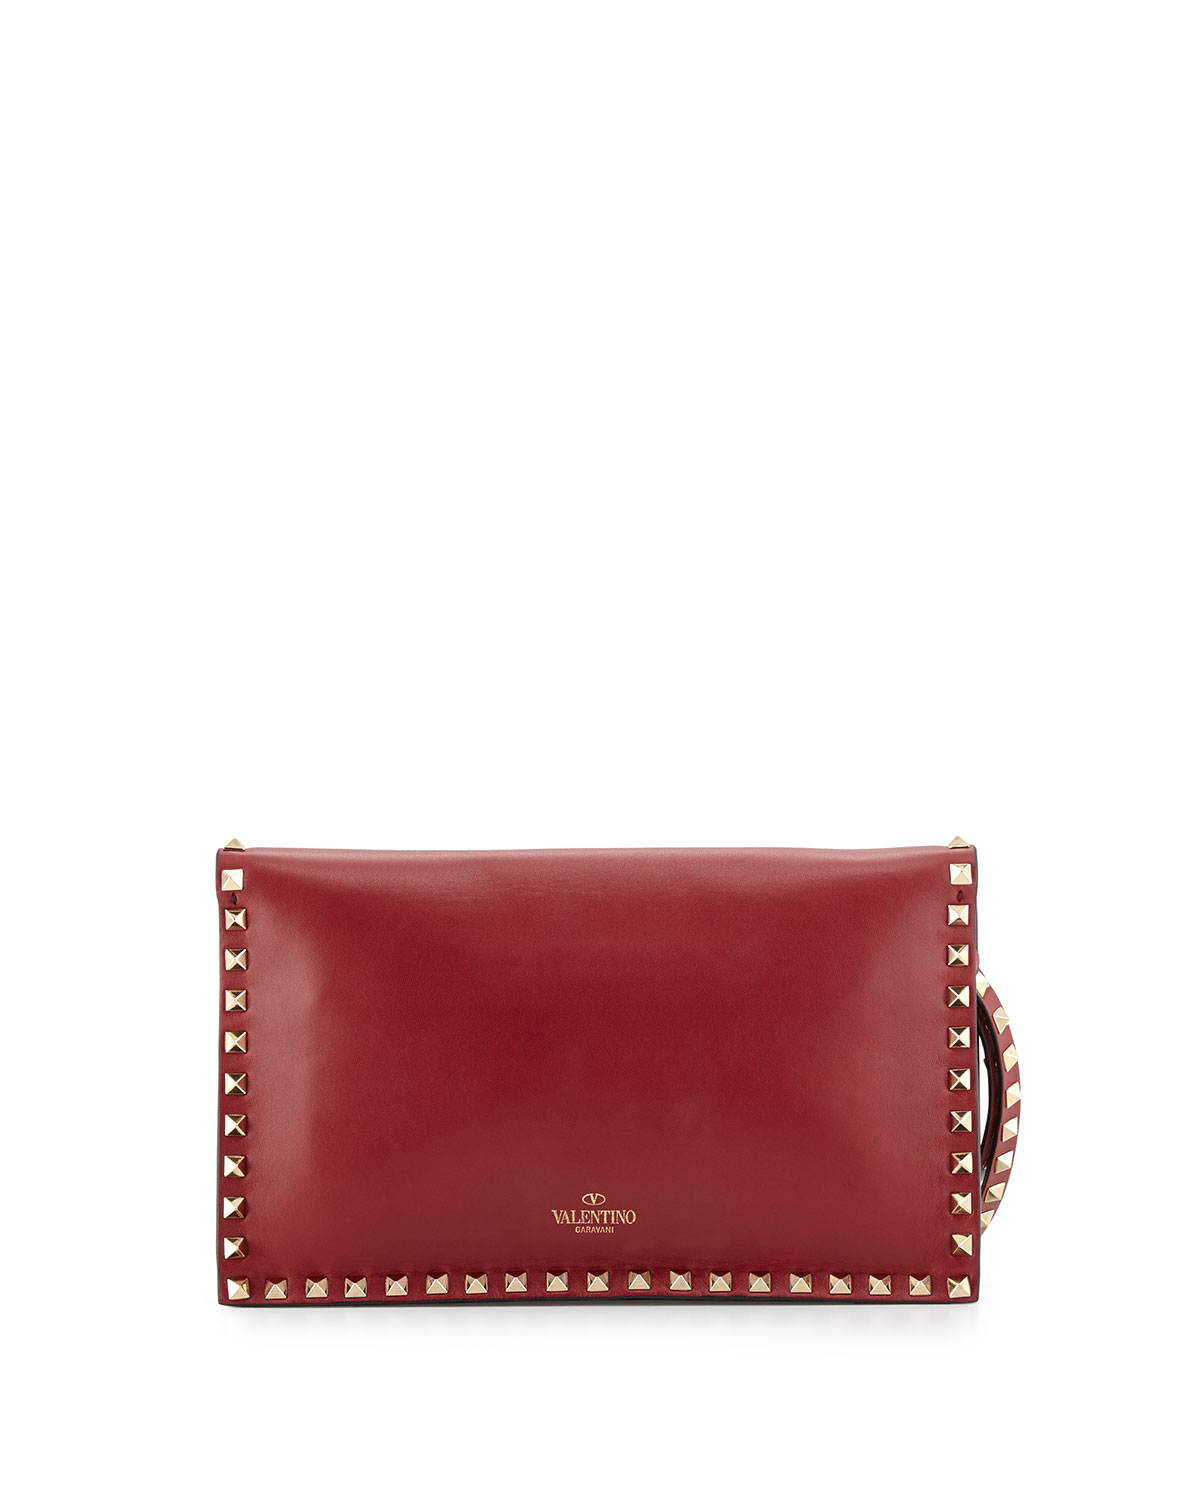 Lyst - Valentino Rockstud Flap Wristlet Clutch Bag in Red